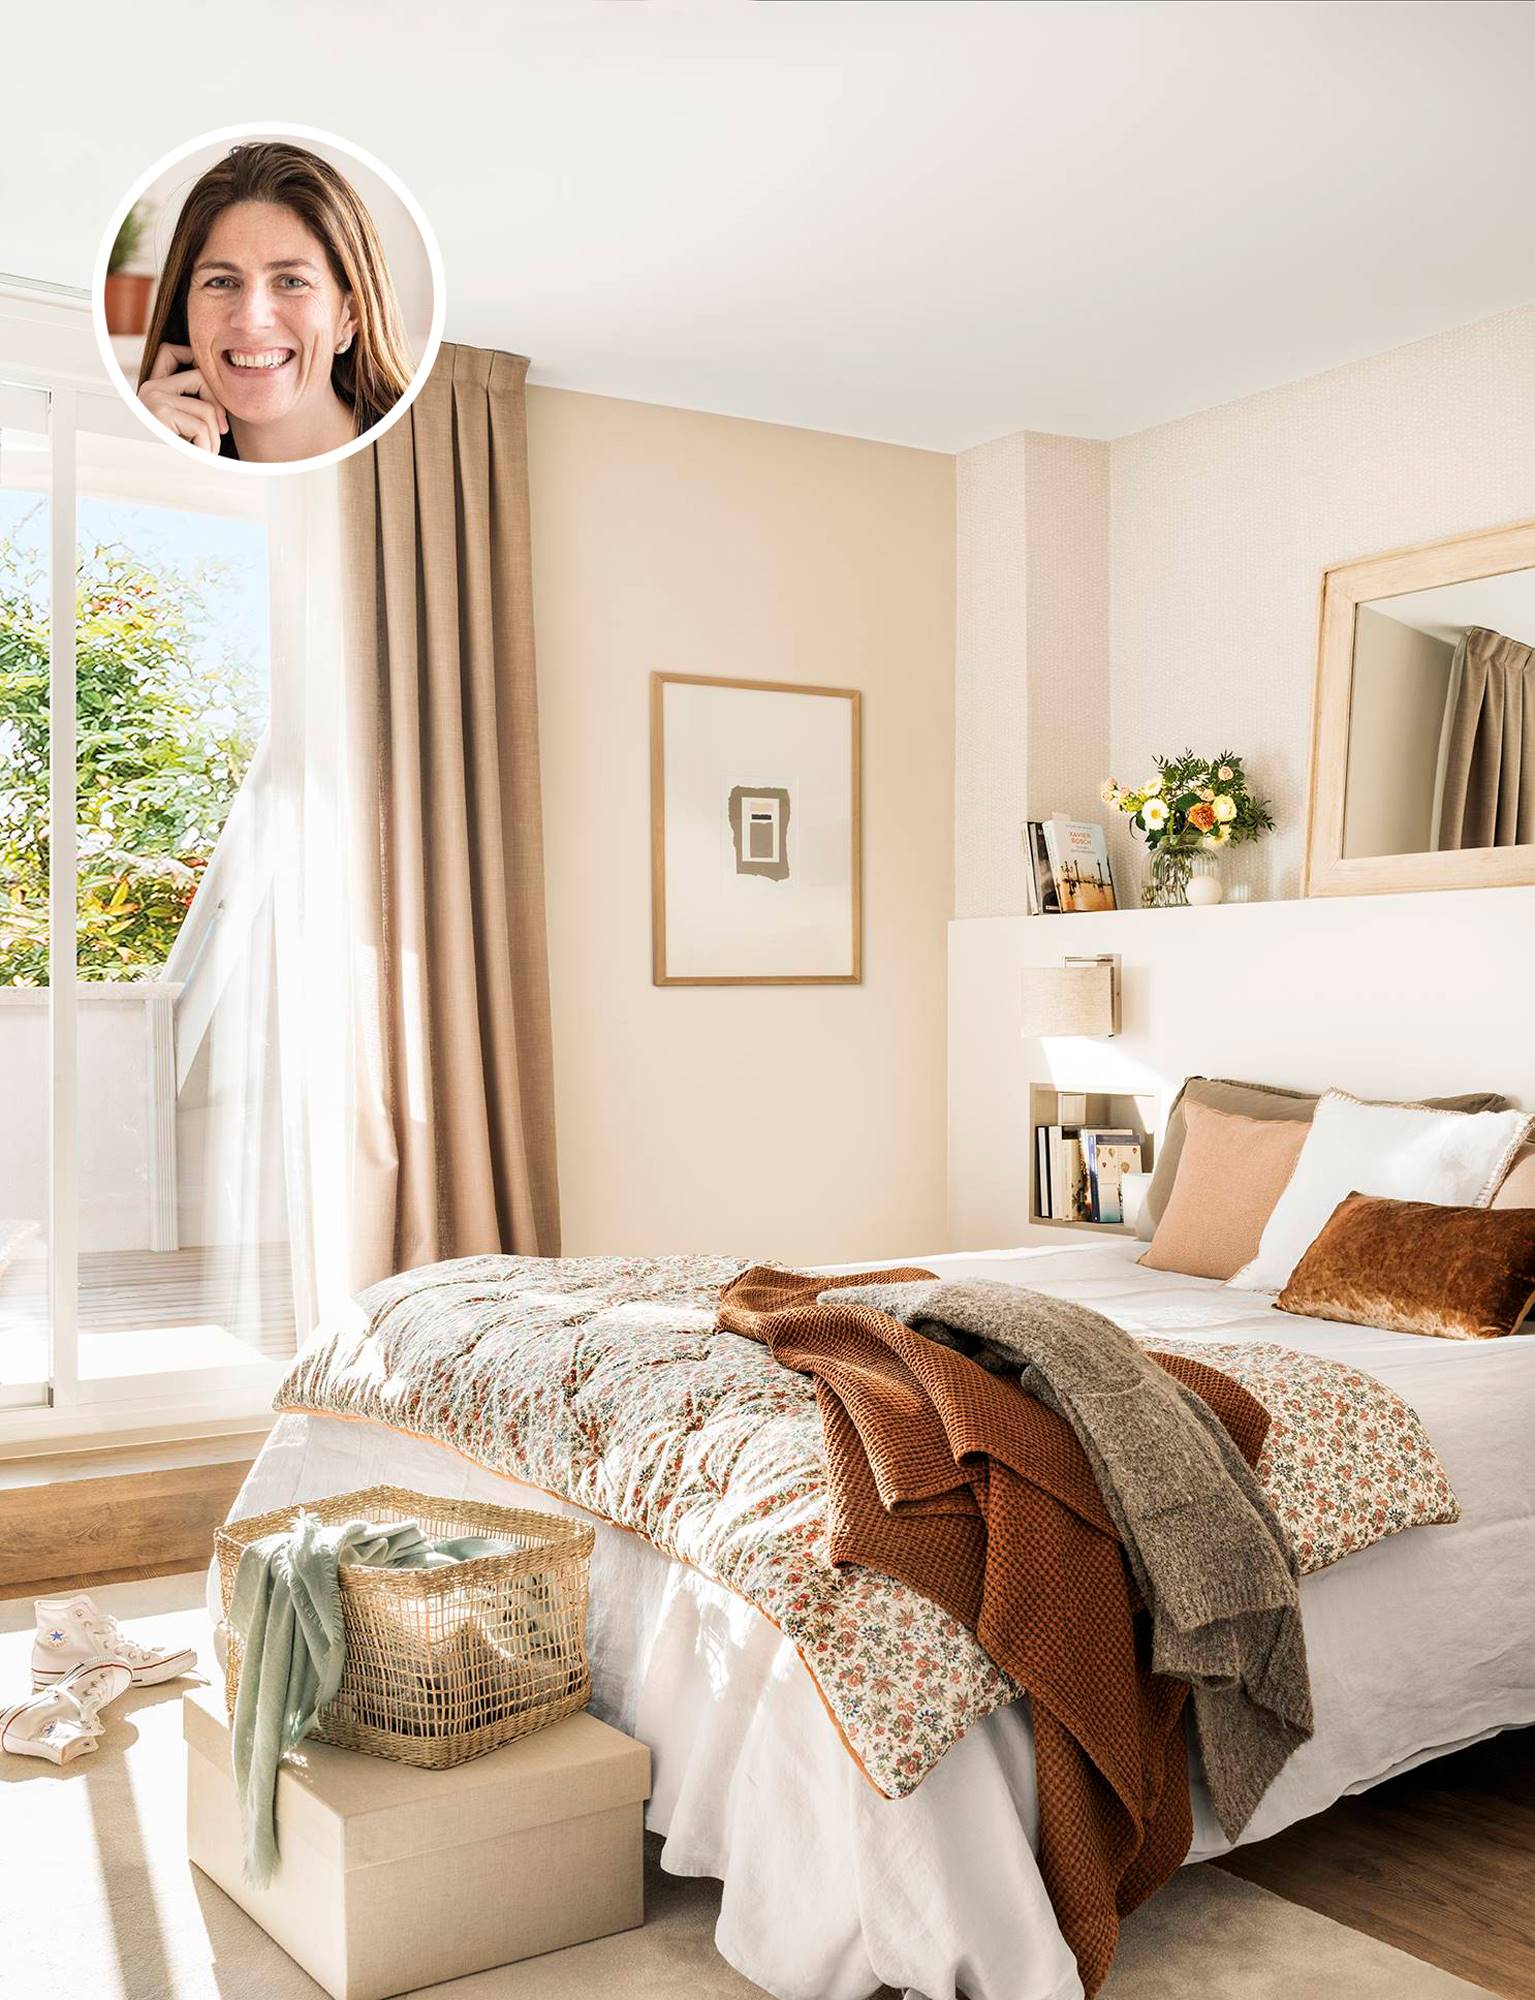 Dormitorio con cabecero de obra decorado en tonos neutros por Pia Capdevila